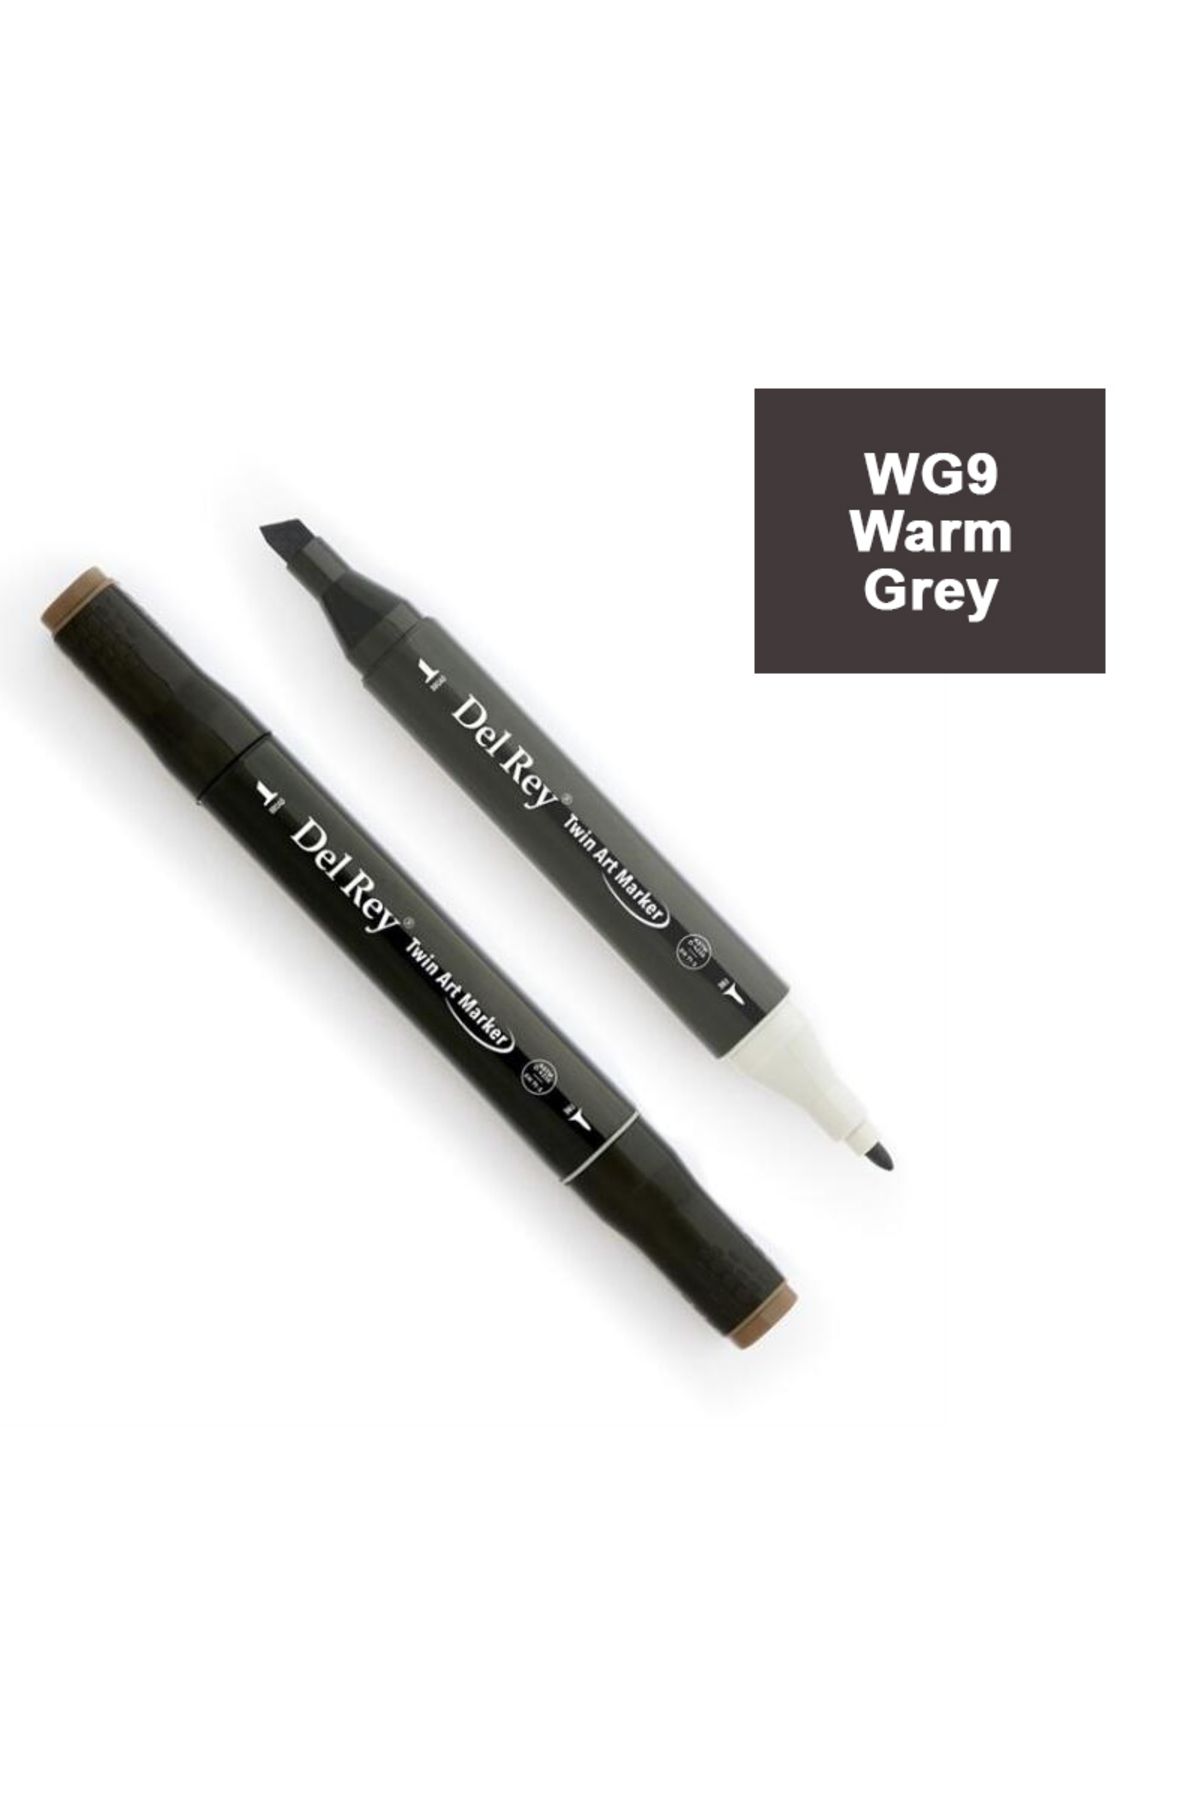 Pebeo Del Rey Twın Marker Wg9 Warm Grey Çift Uçlu Grafik Kalemi Mn-Drwg9